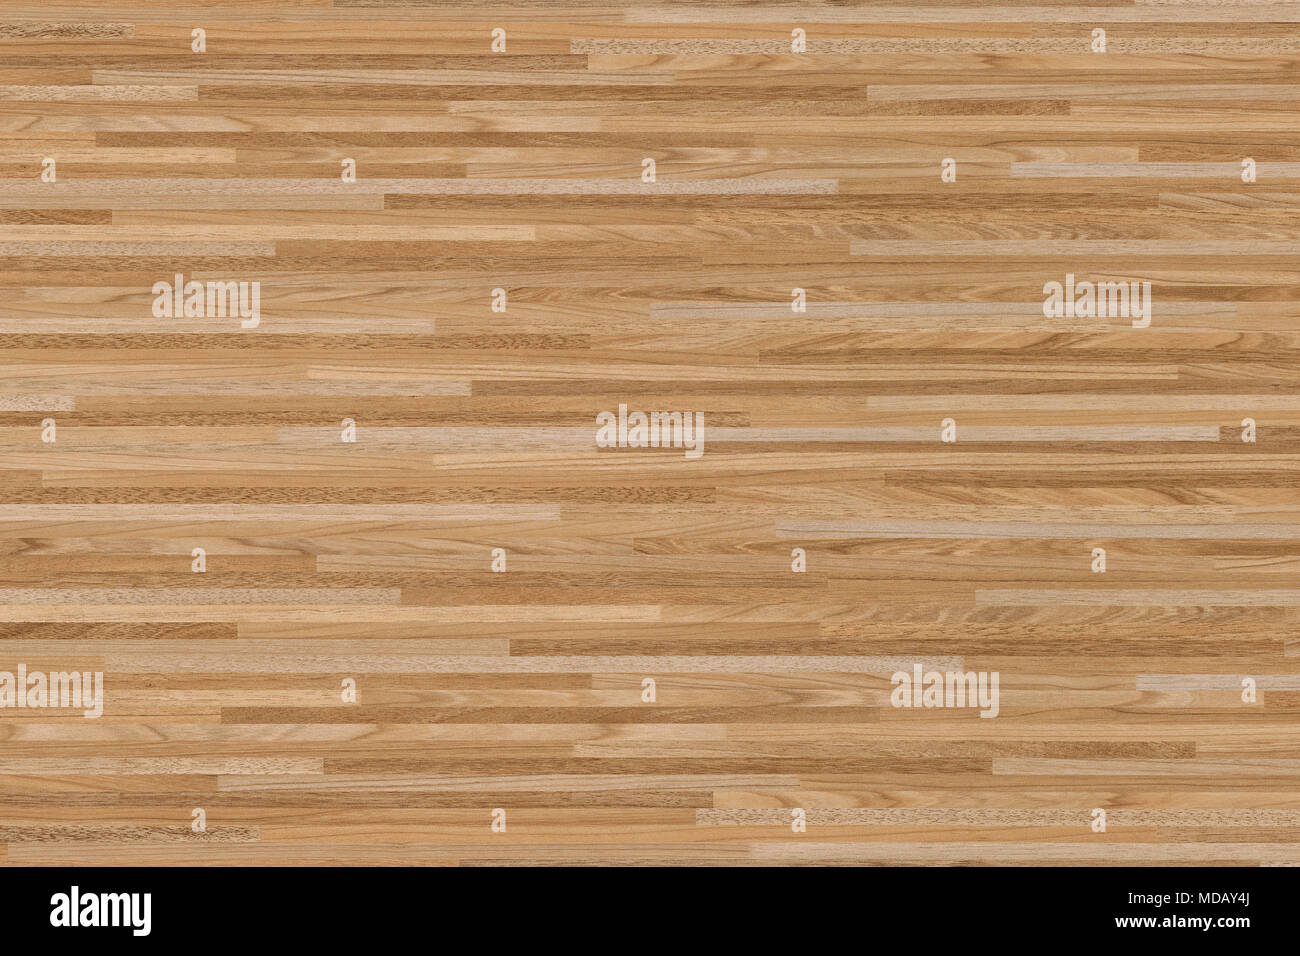 wooden parquet, parkett. wood parquet texture background Stock Photo